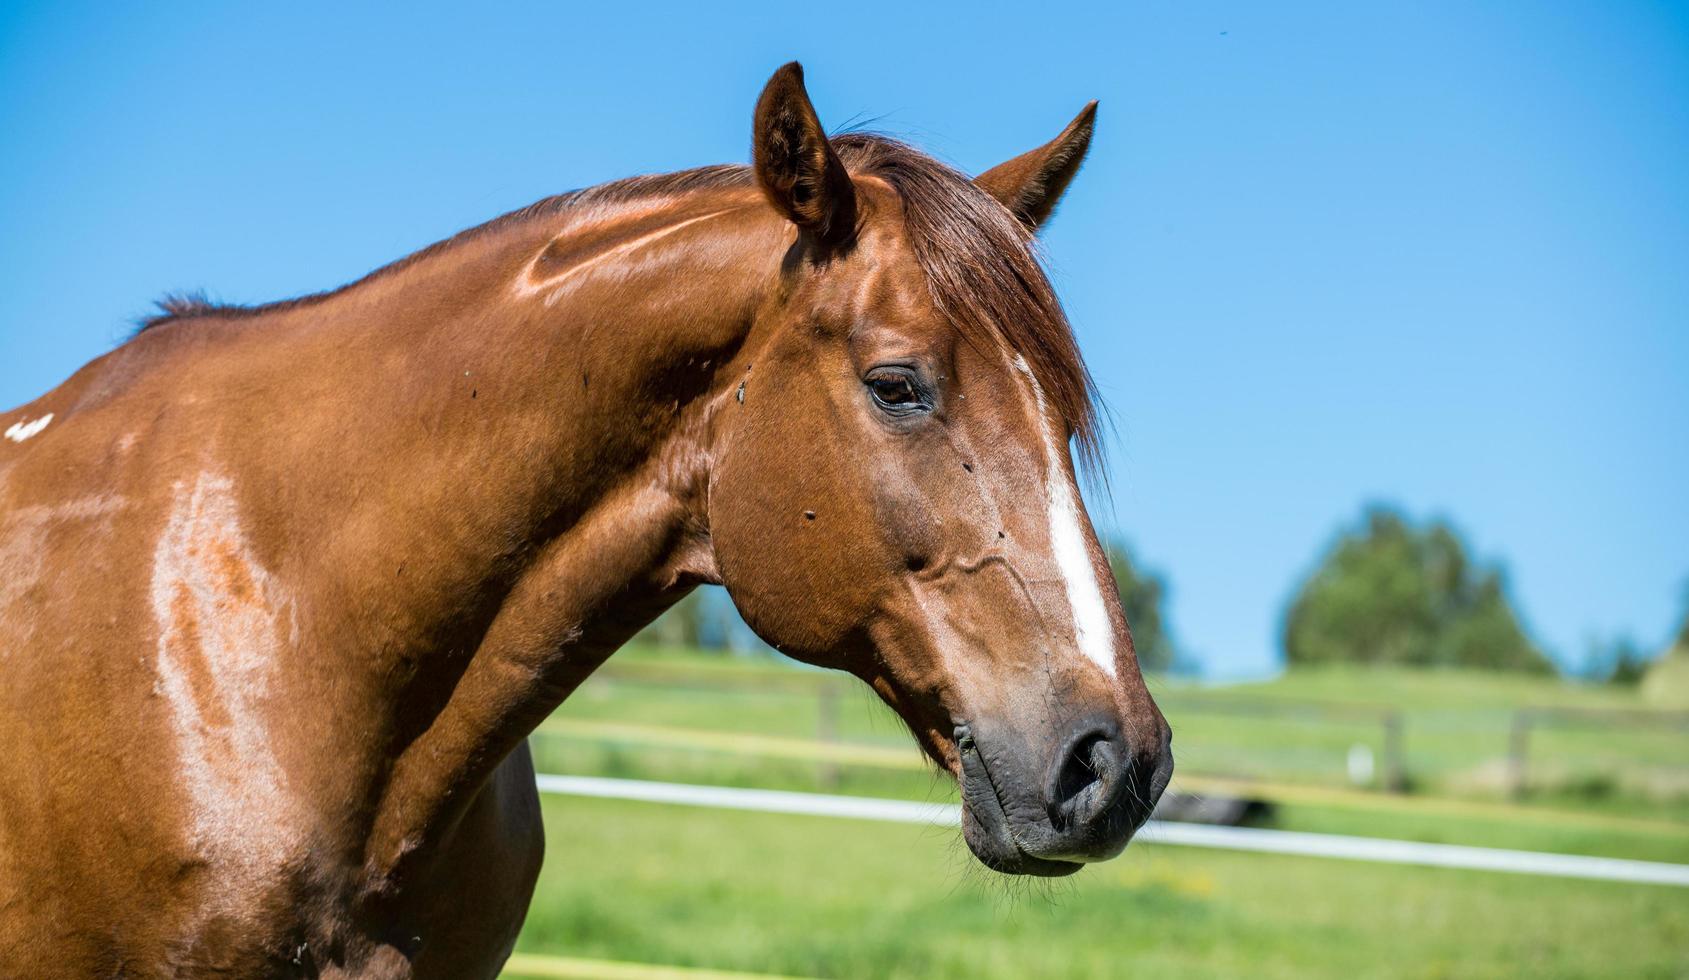 brown-horse-against-blue-sky-close-up-shot-free-photo.jpg